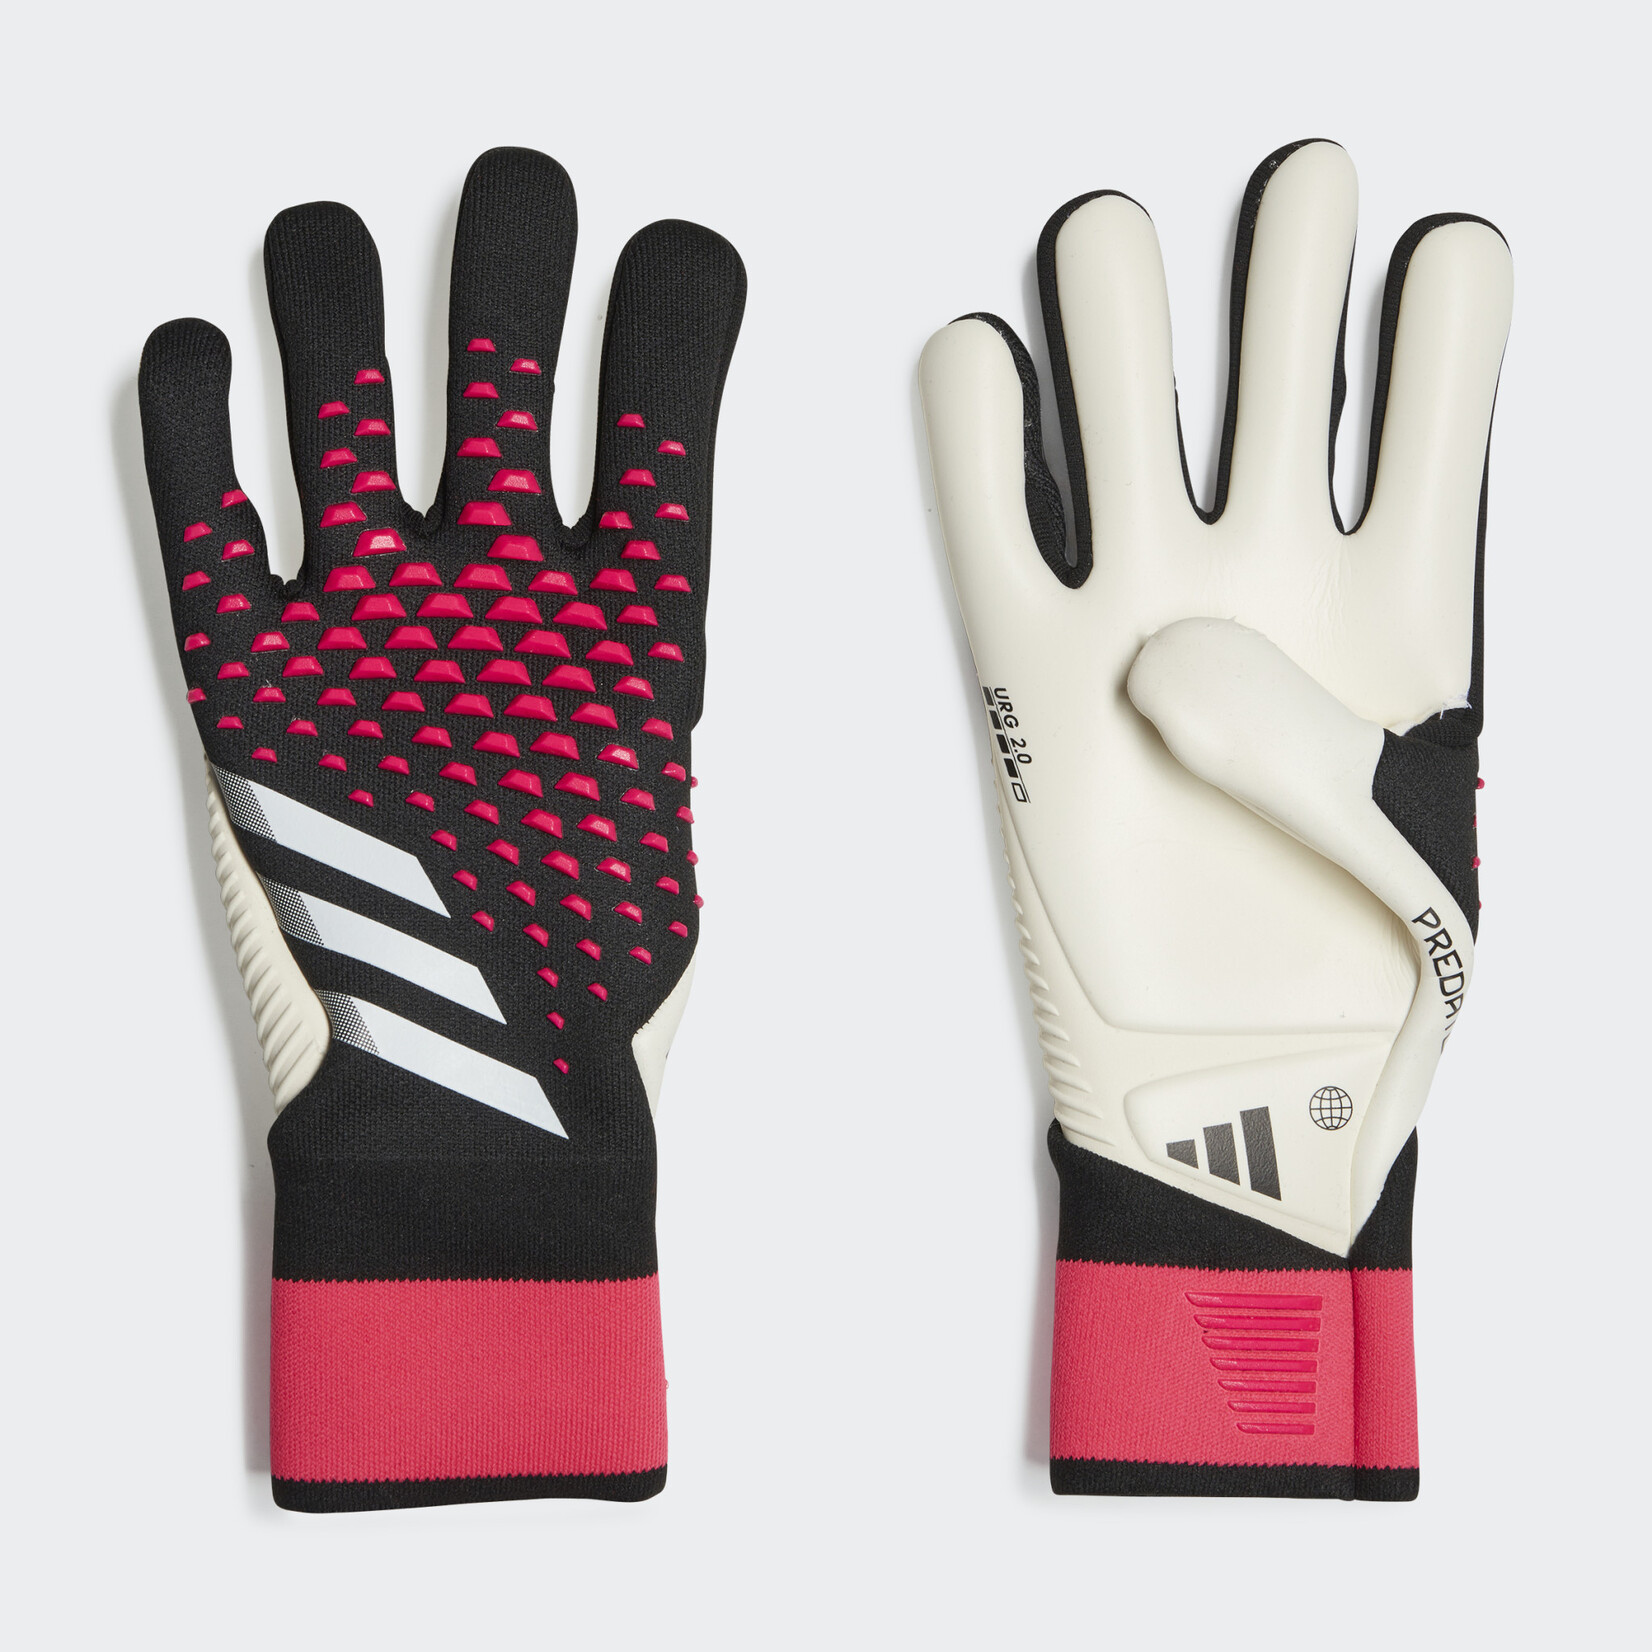 Adidas Predator GL Pro Goalkeeper Gloves